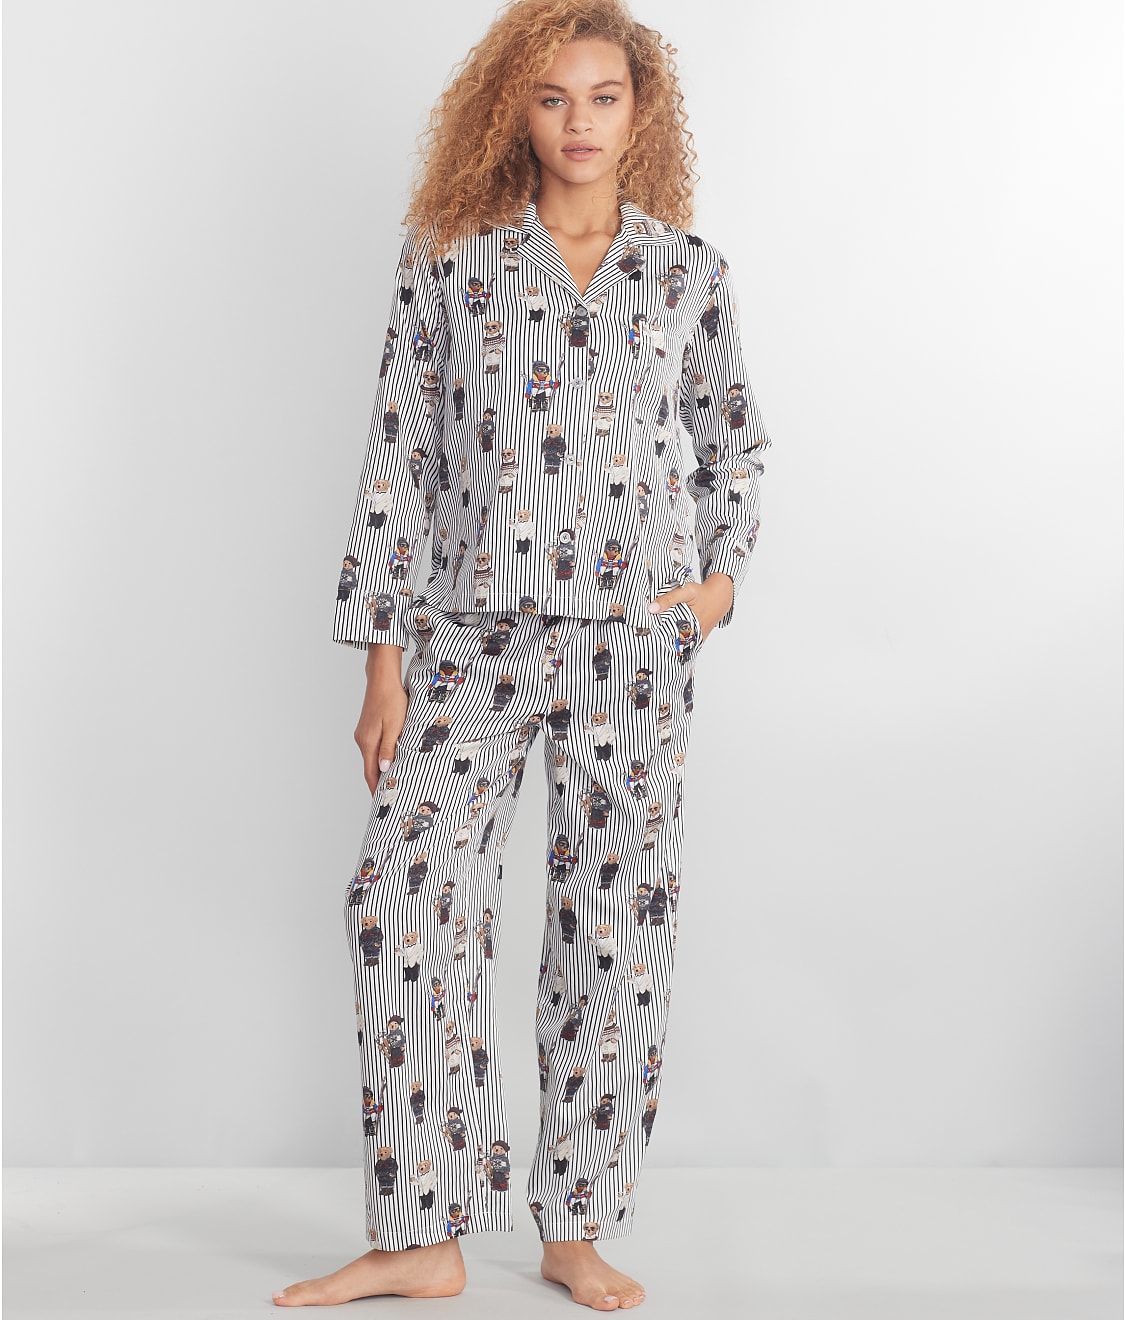 Bear Woven Pajama Set